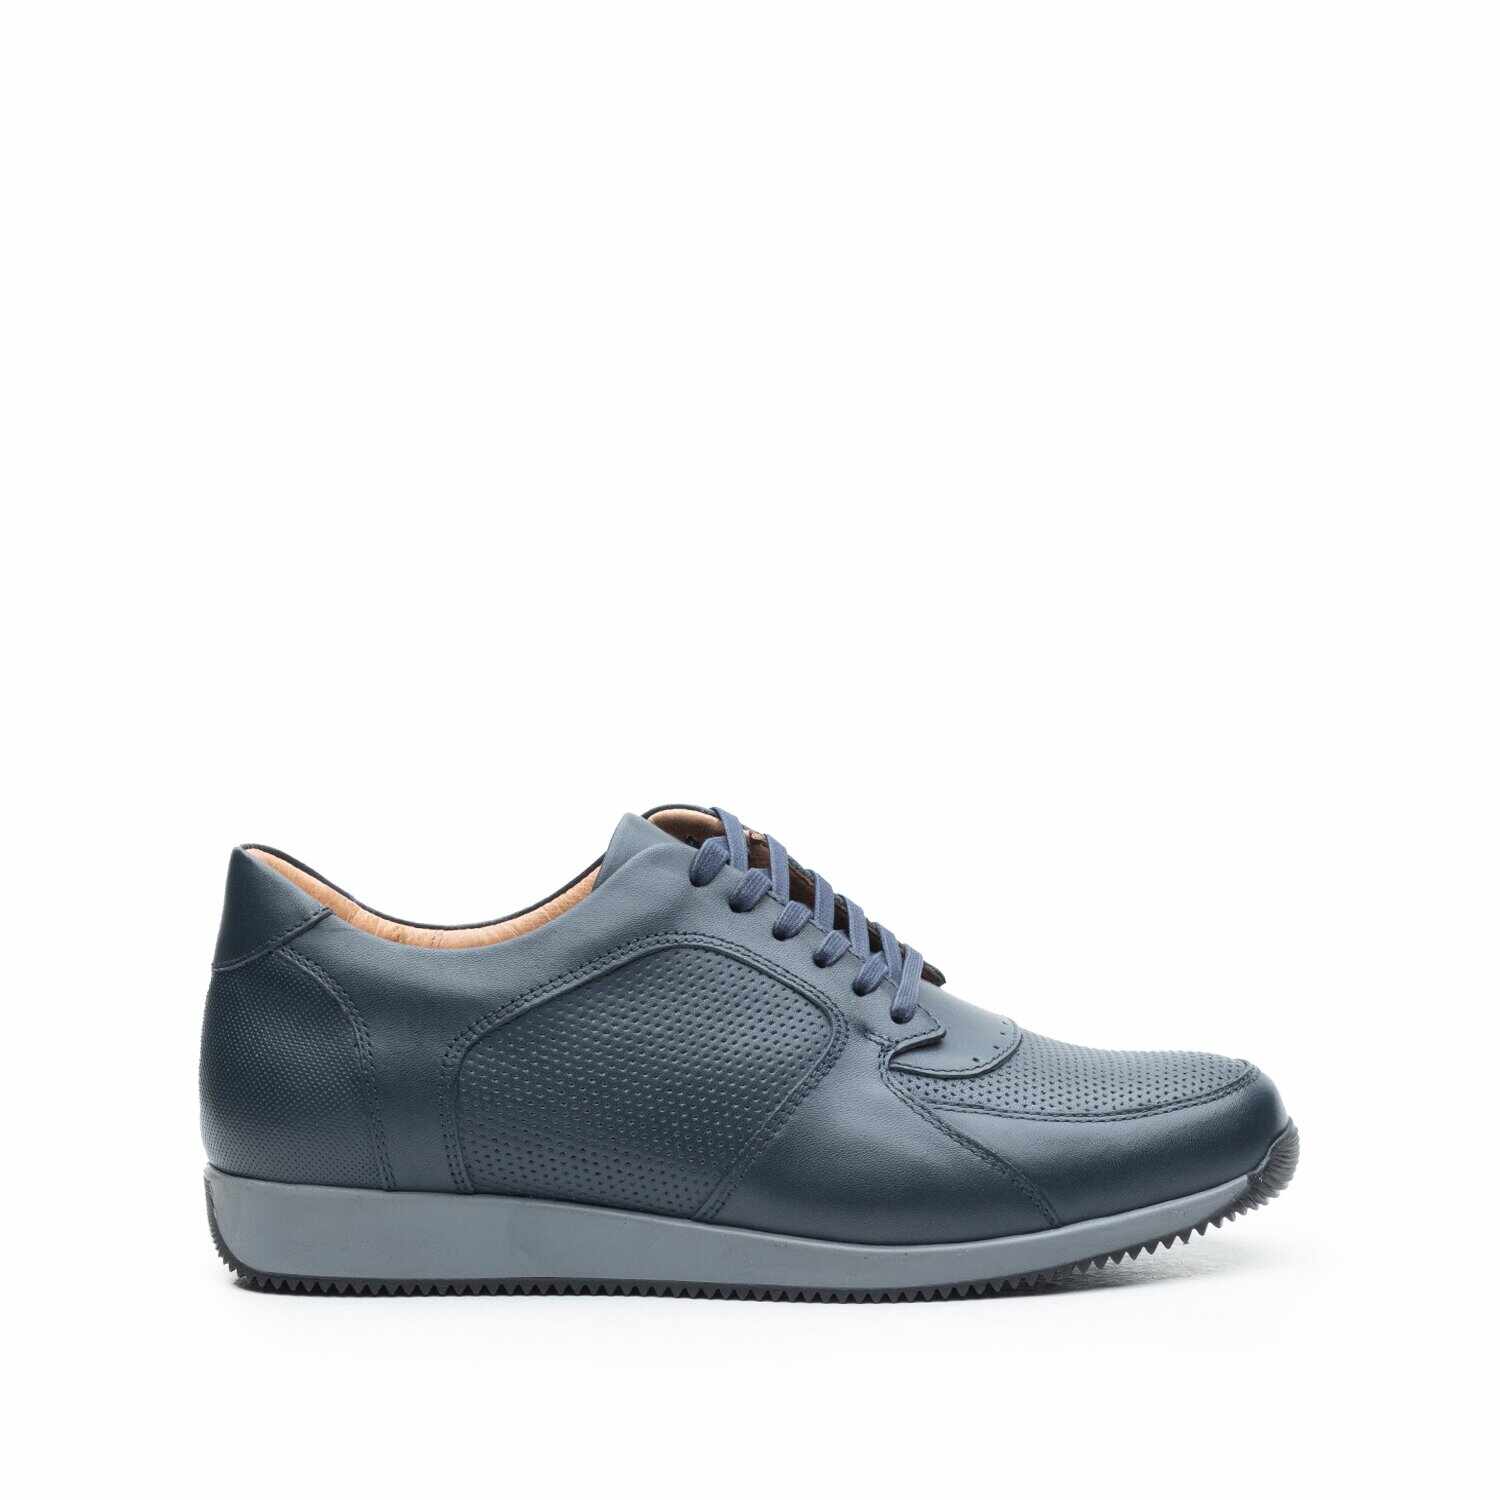 Pantofi sport barbati din piele naturala, Leofex - 519-1 Blue Box